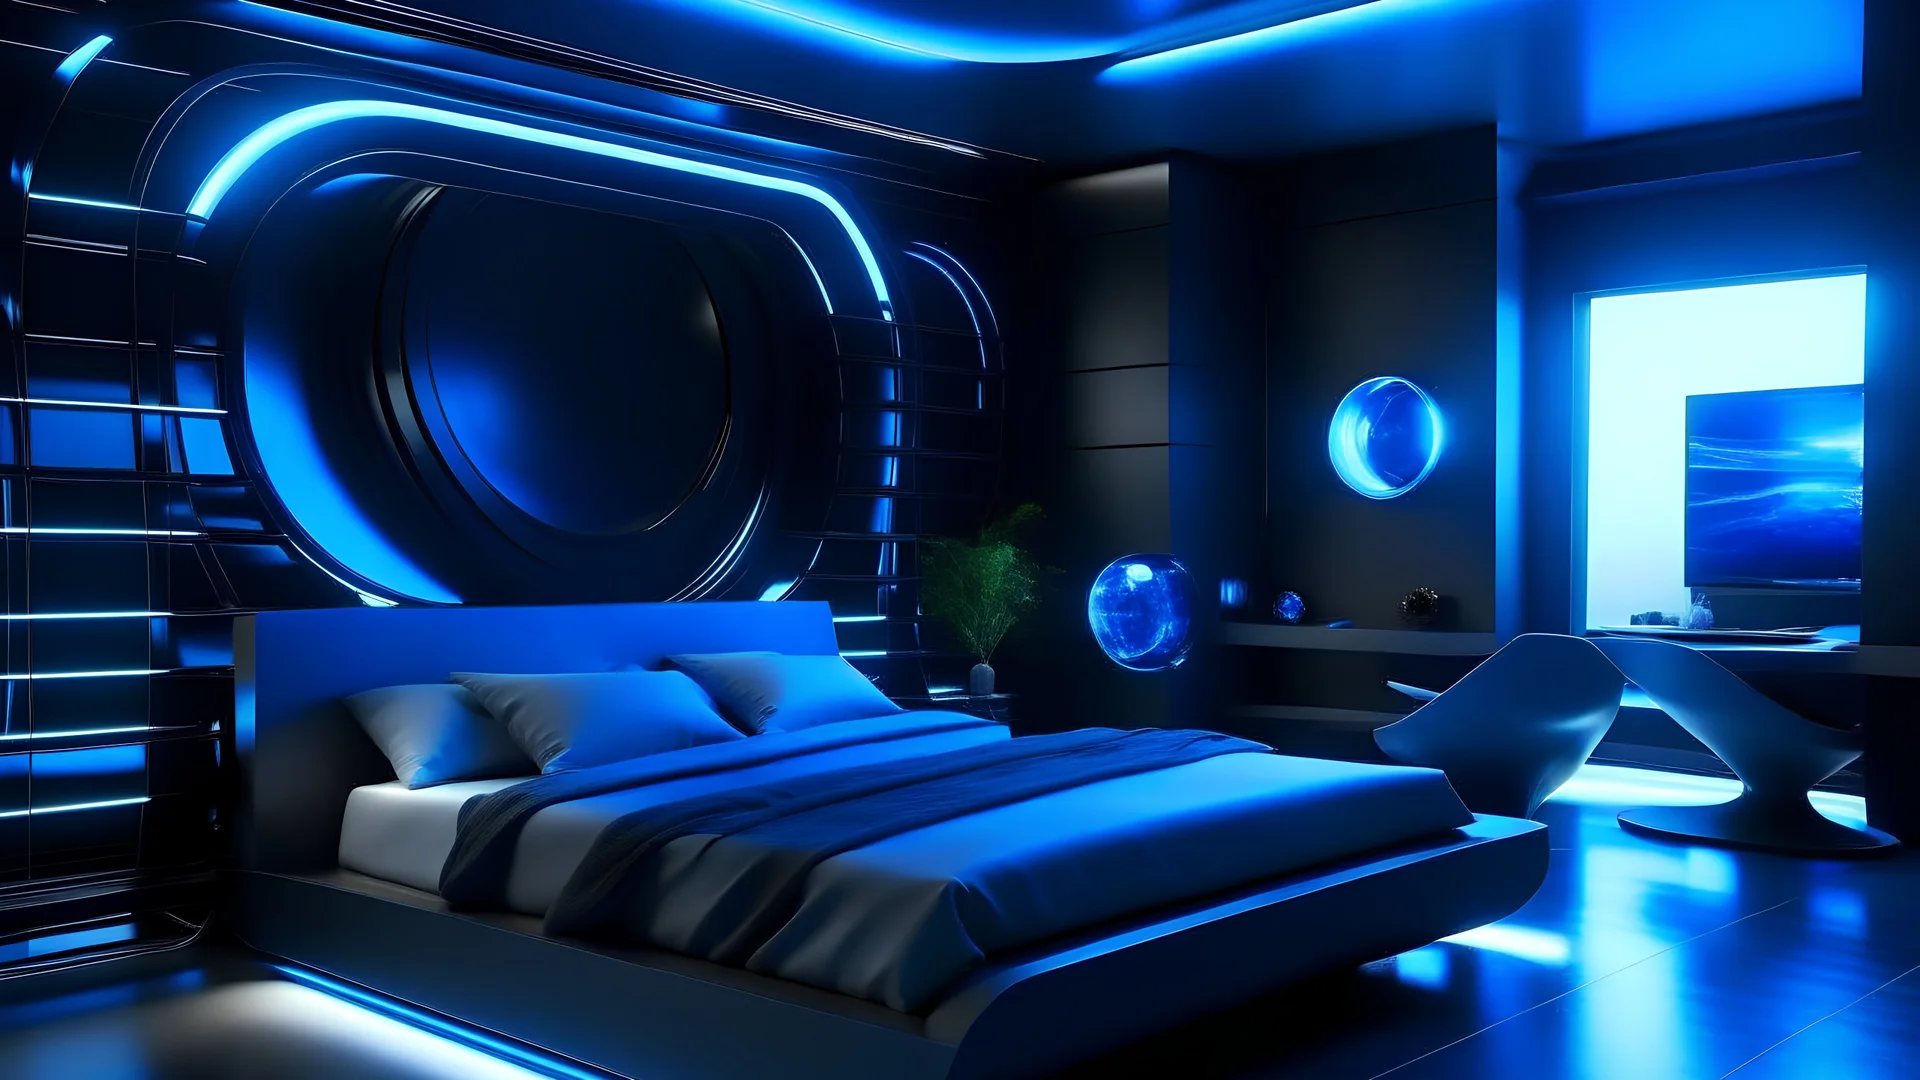 futuristic bedroom, blue and black colors